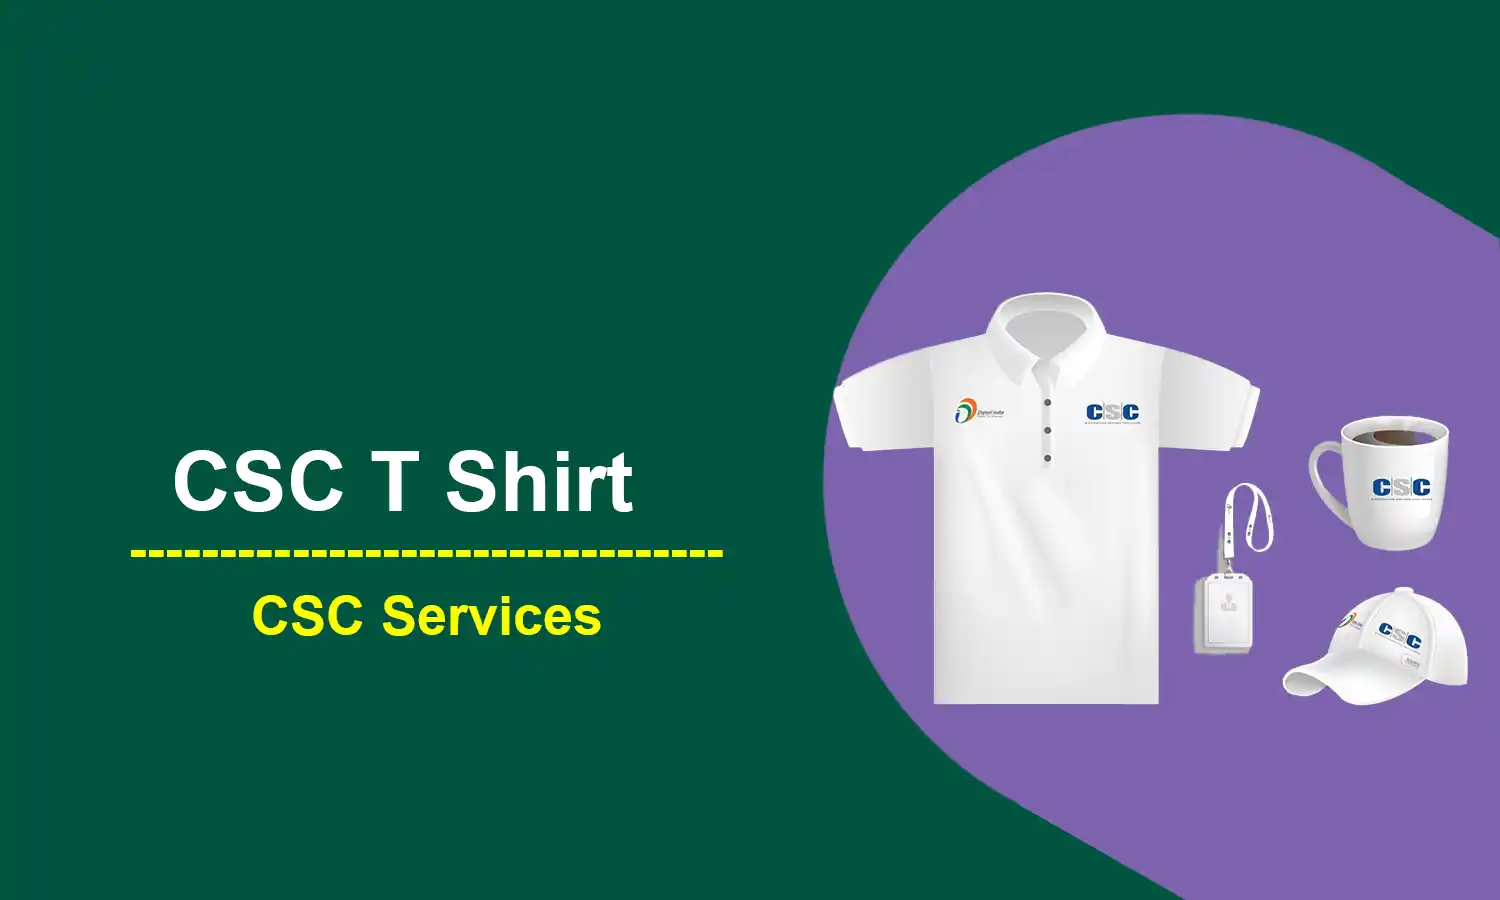 CSC T Shirt